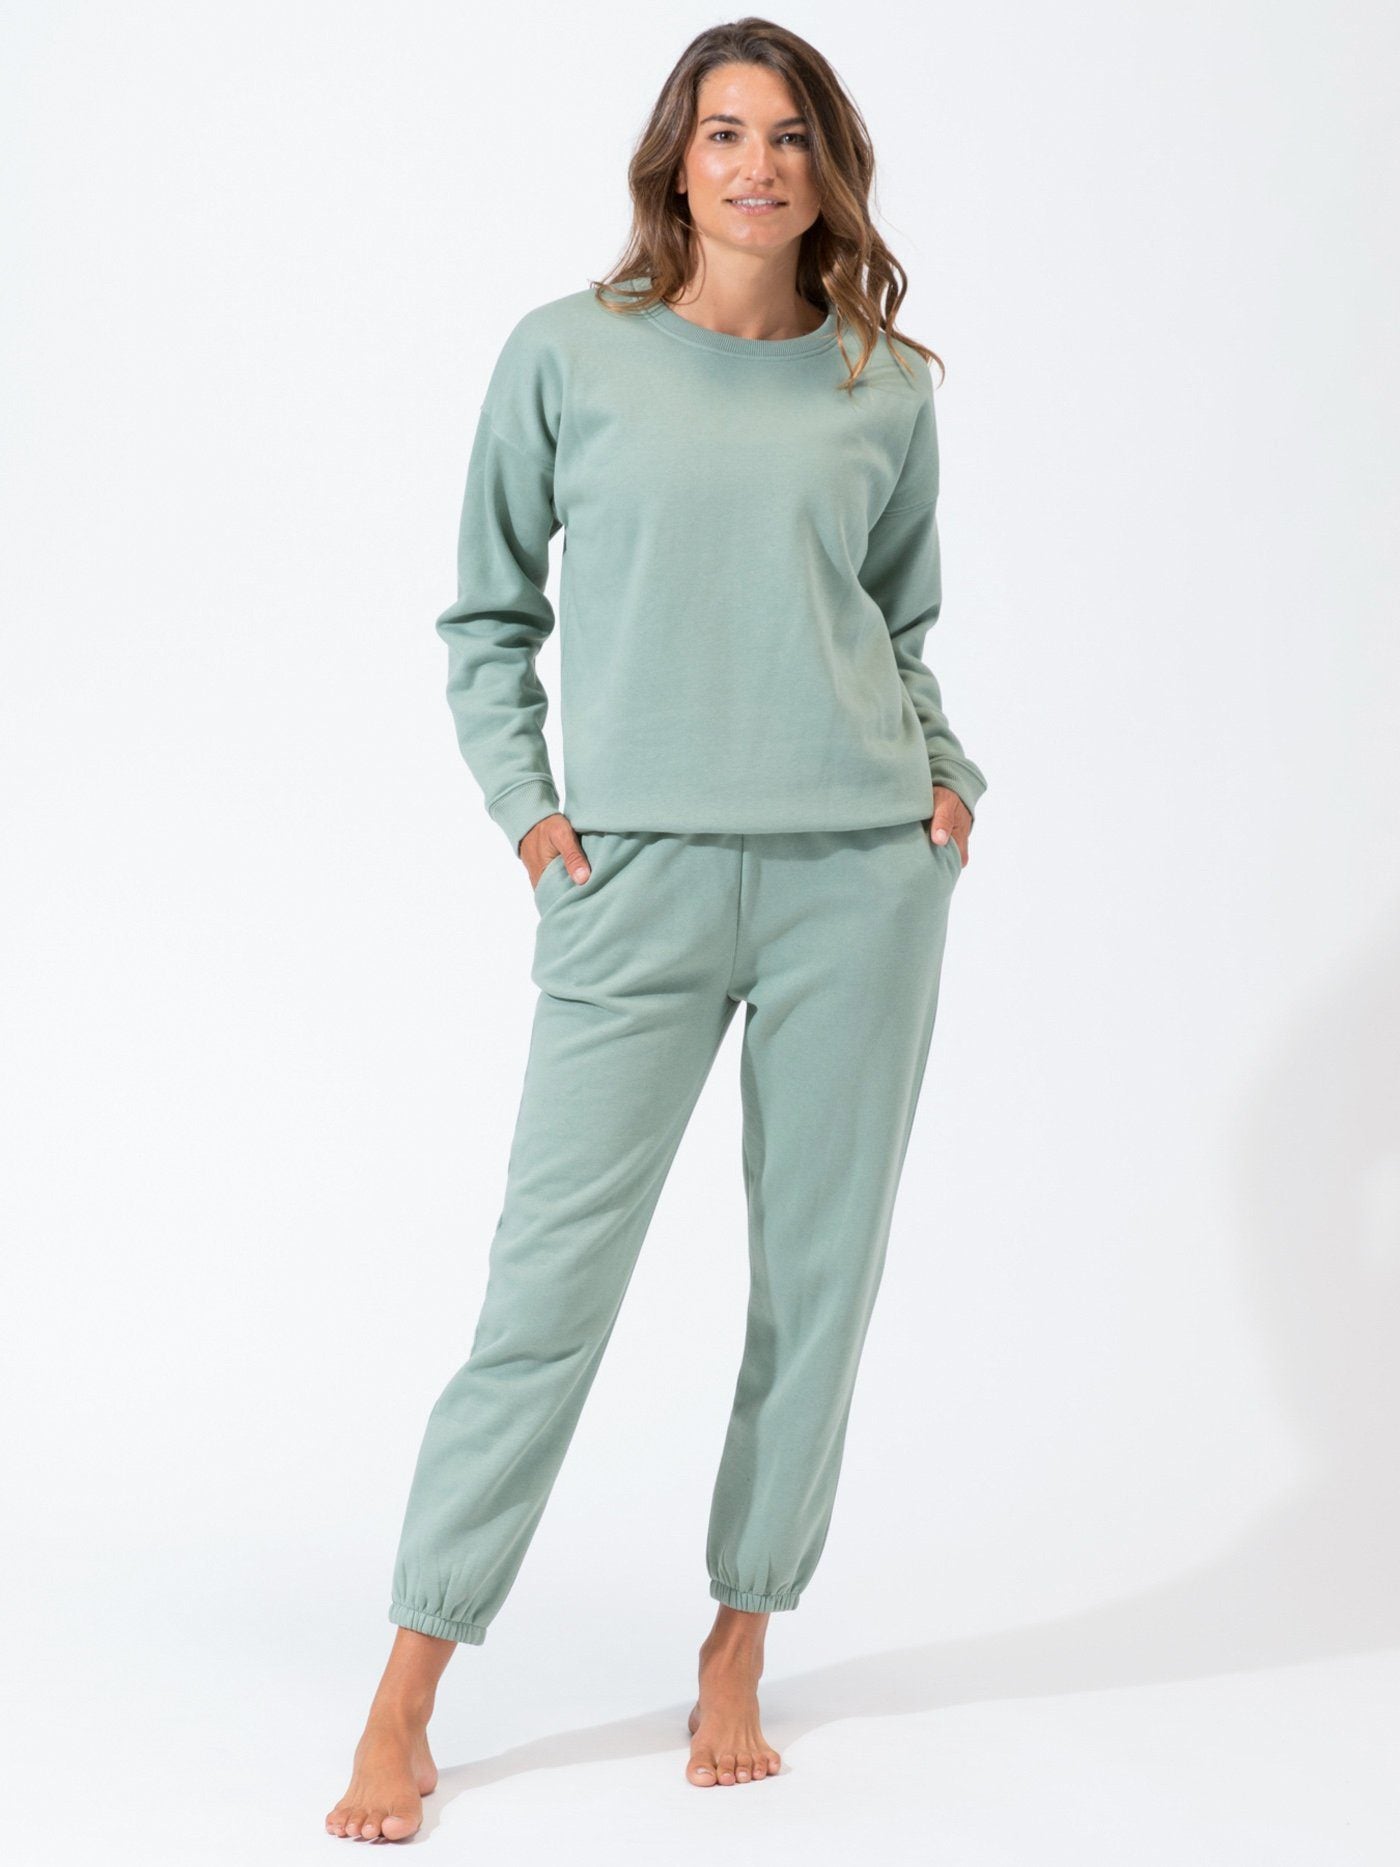 WoInvincible Fleece Pullover Crew Womens Outerwear Sweatshirt Threads 4 Thought 